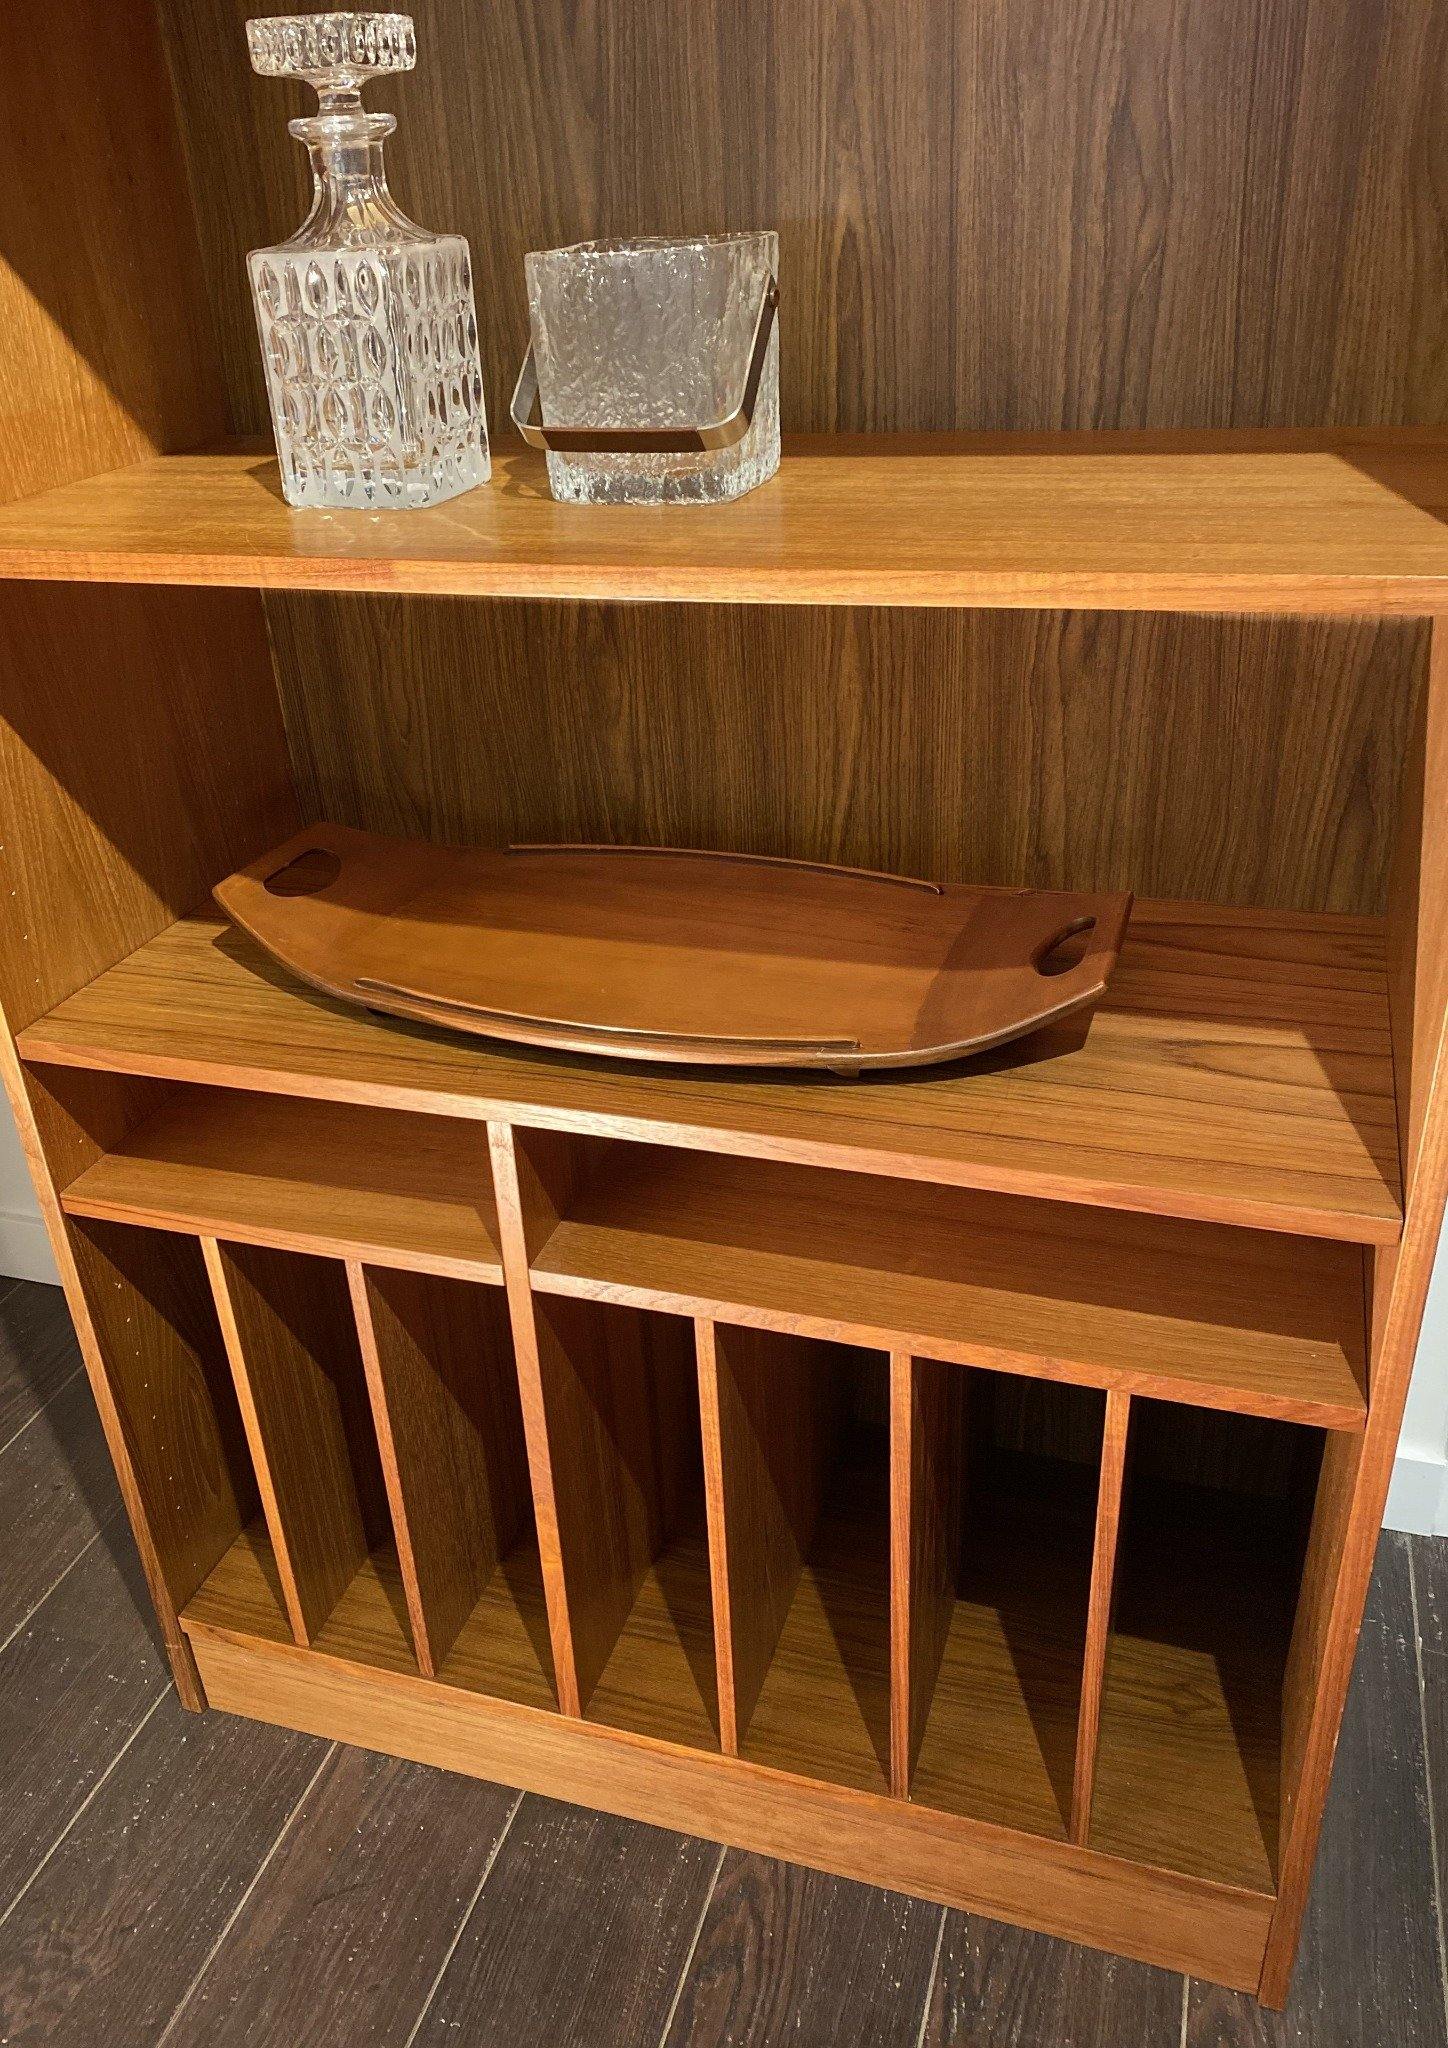 Bottom half of Danish teak shelves with vertical shelves for vinyl LPs- Cook Street Vintage